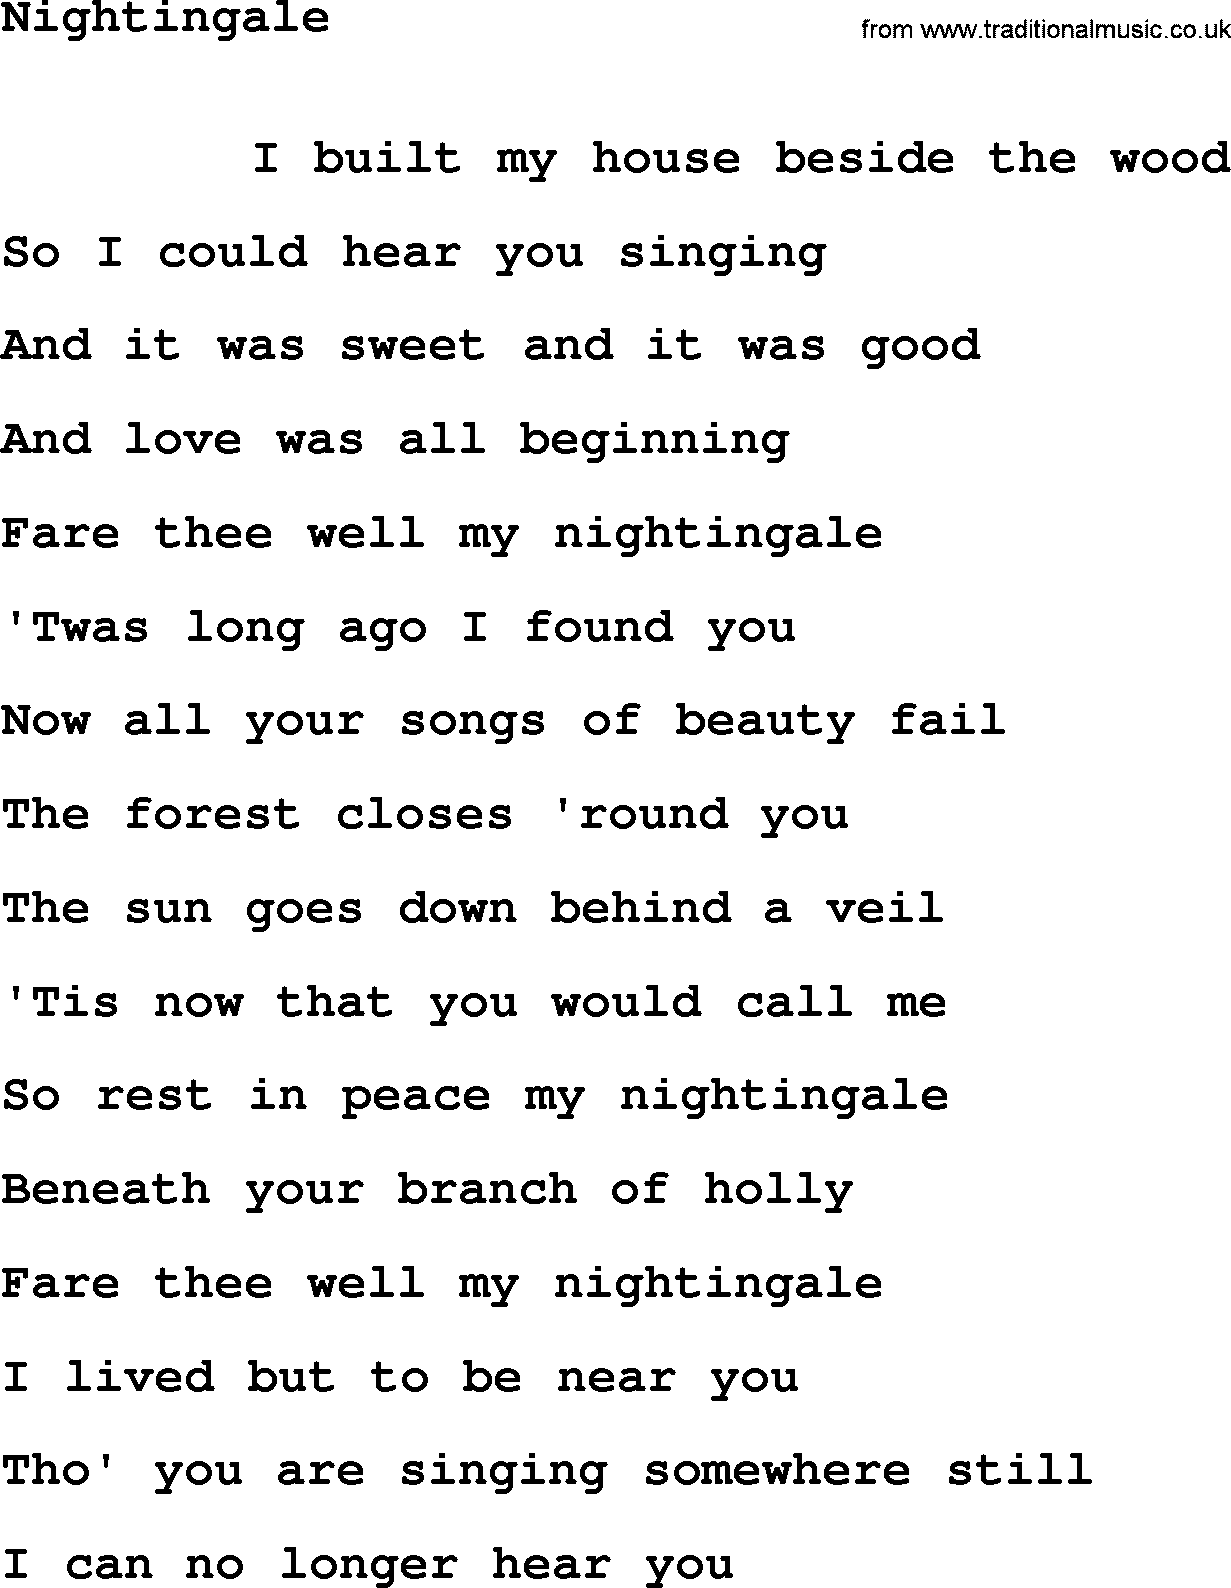 Leonard Cohen song Nightingale-leonard-cohen.txt lyrics